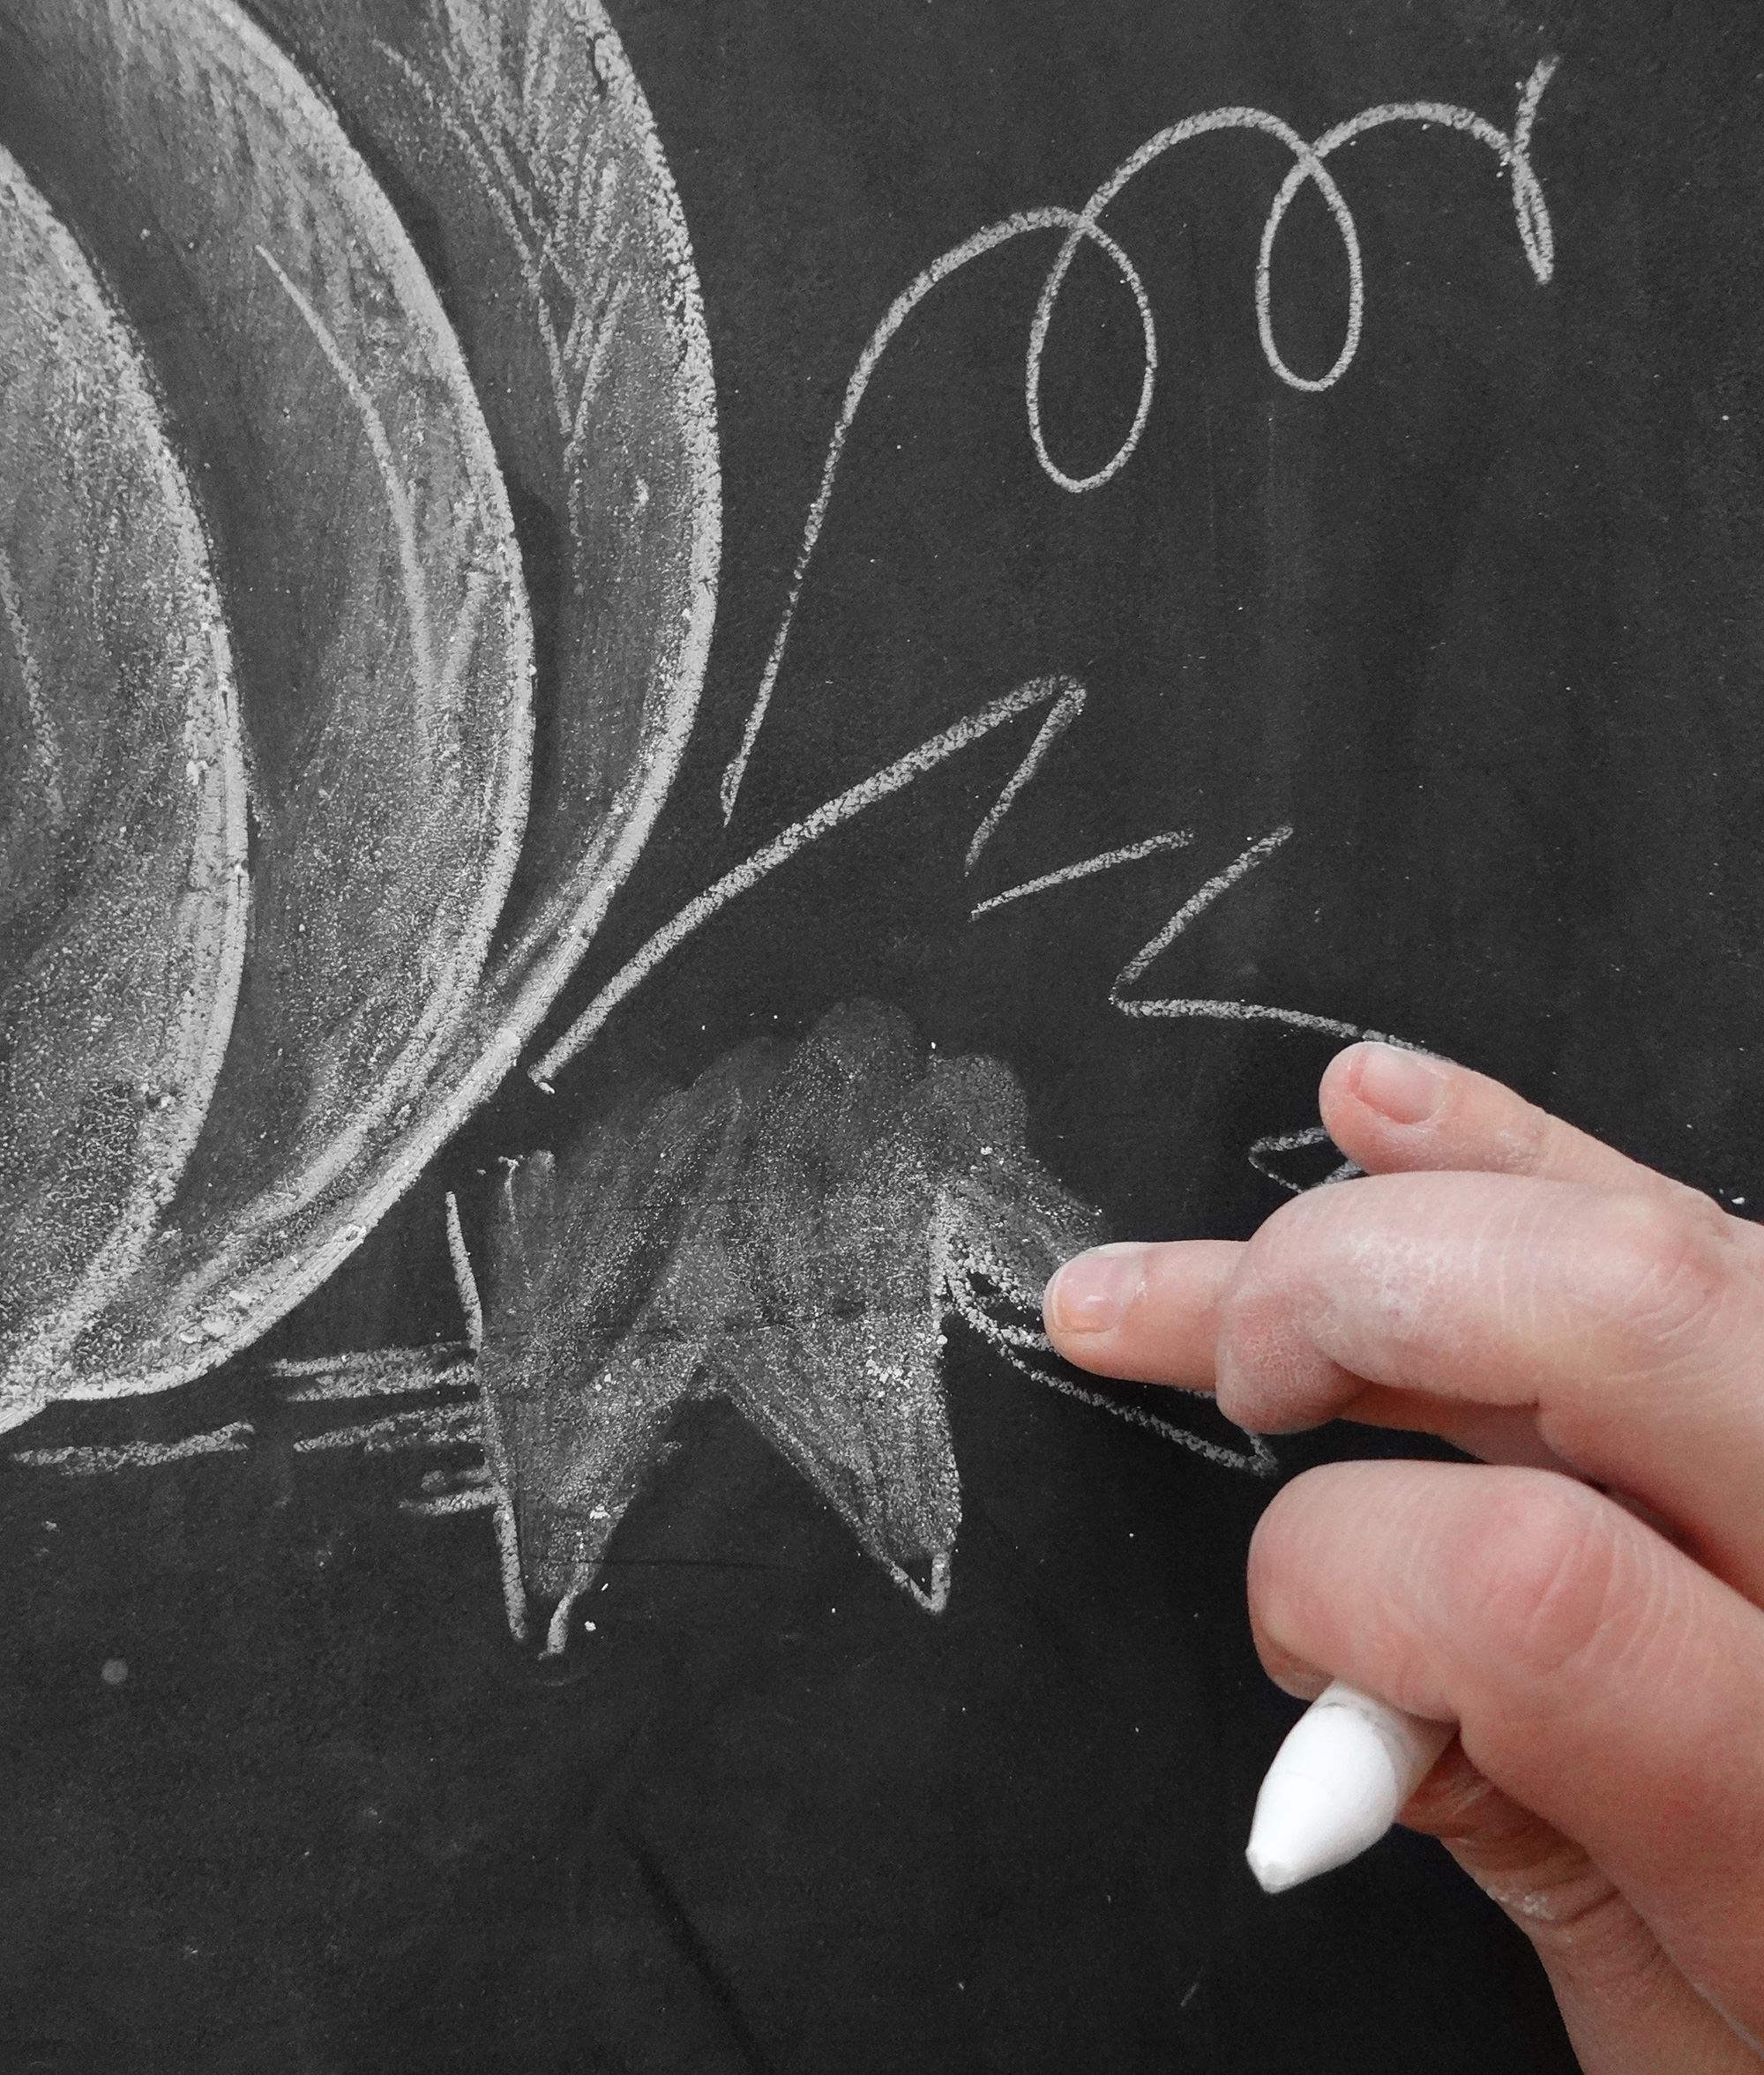 How to draw chalk art - a pumpkin tutorial by Valerie McKeehan